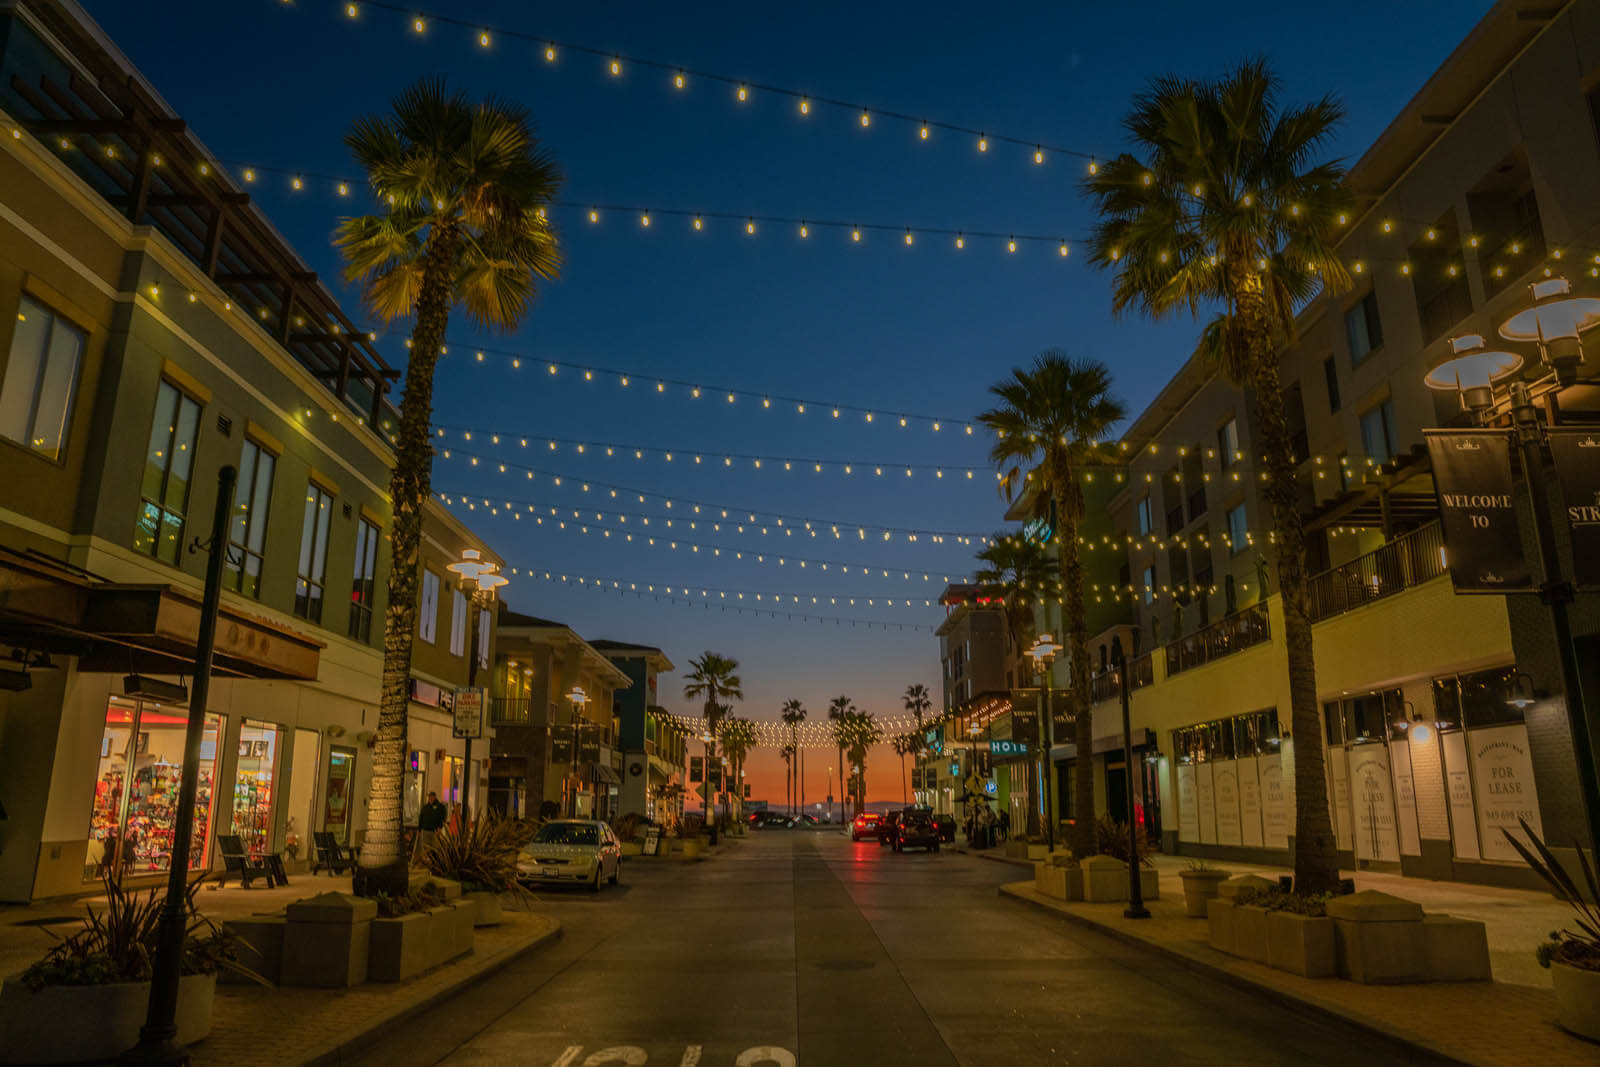 downtown Huntington Beach lit up at night